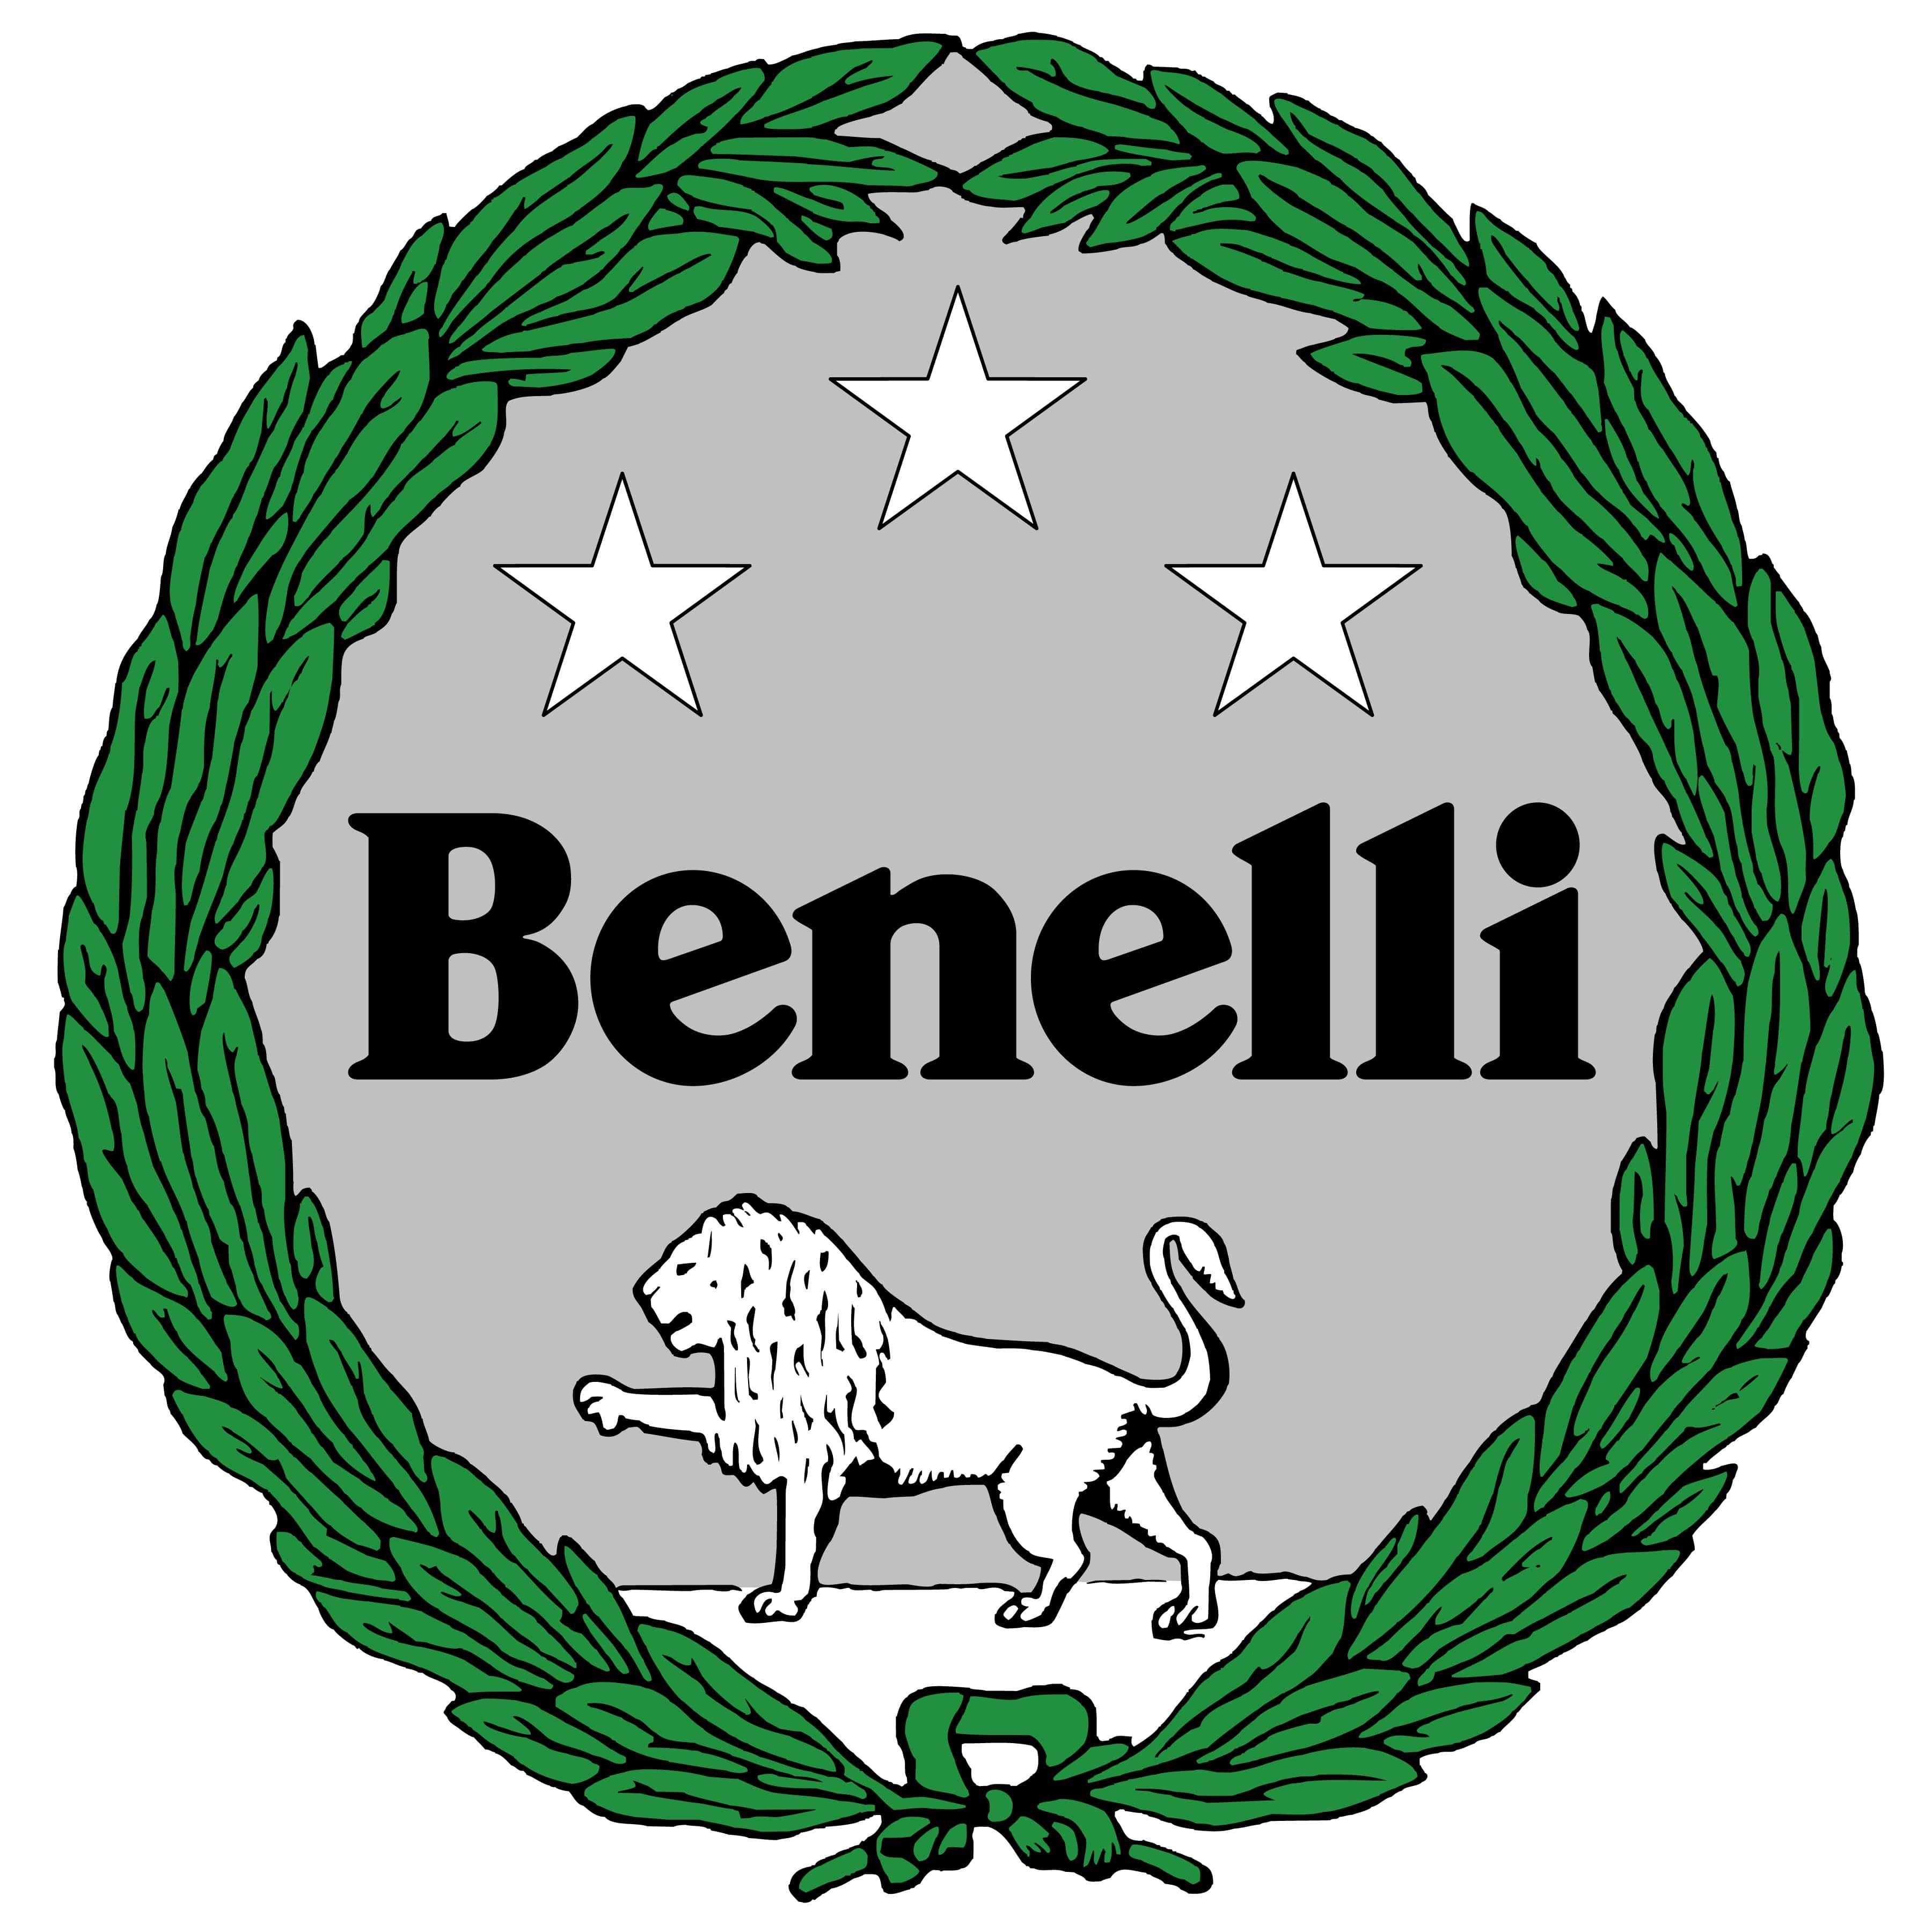 Benelli Logo - Logo Benelli Motorcycle. Motorcycle Logos. Motorcycle, Motorcycle